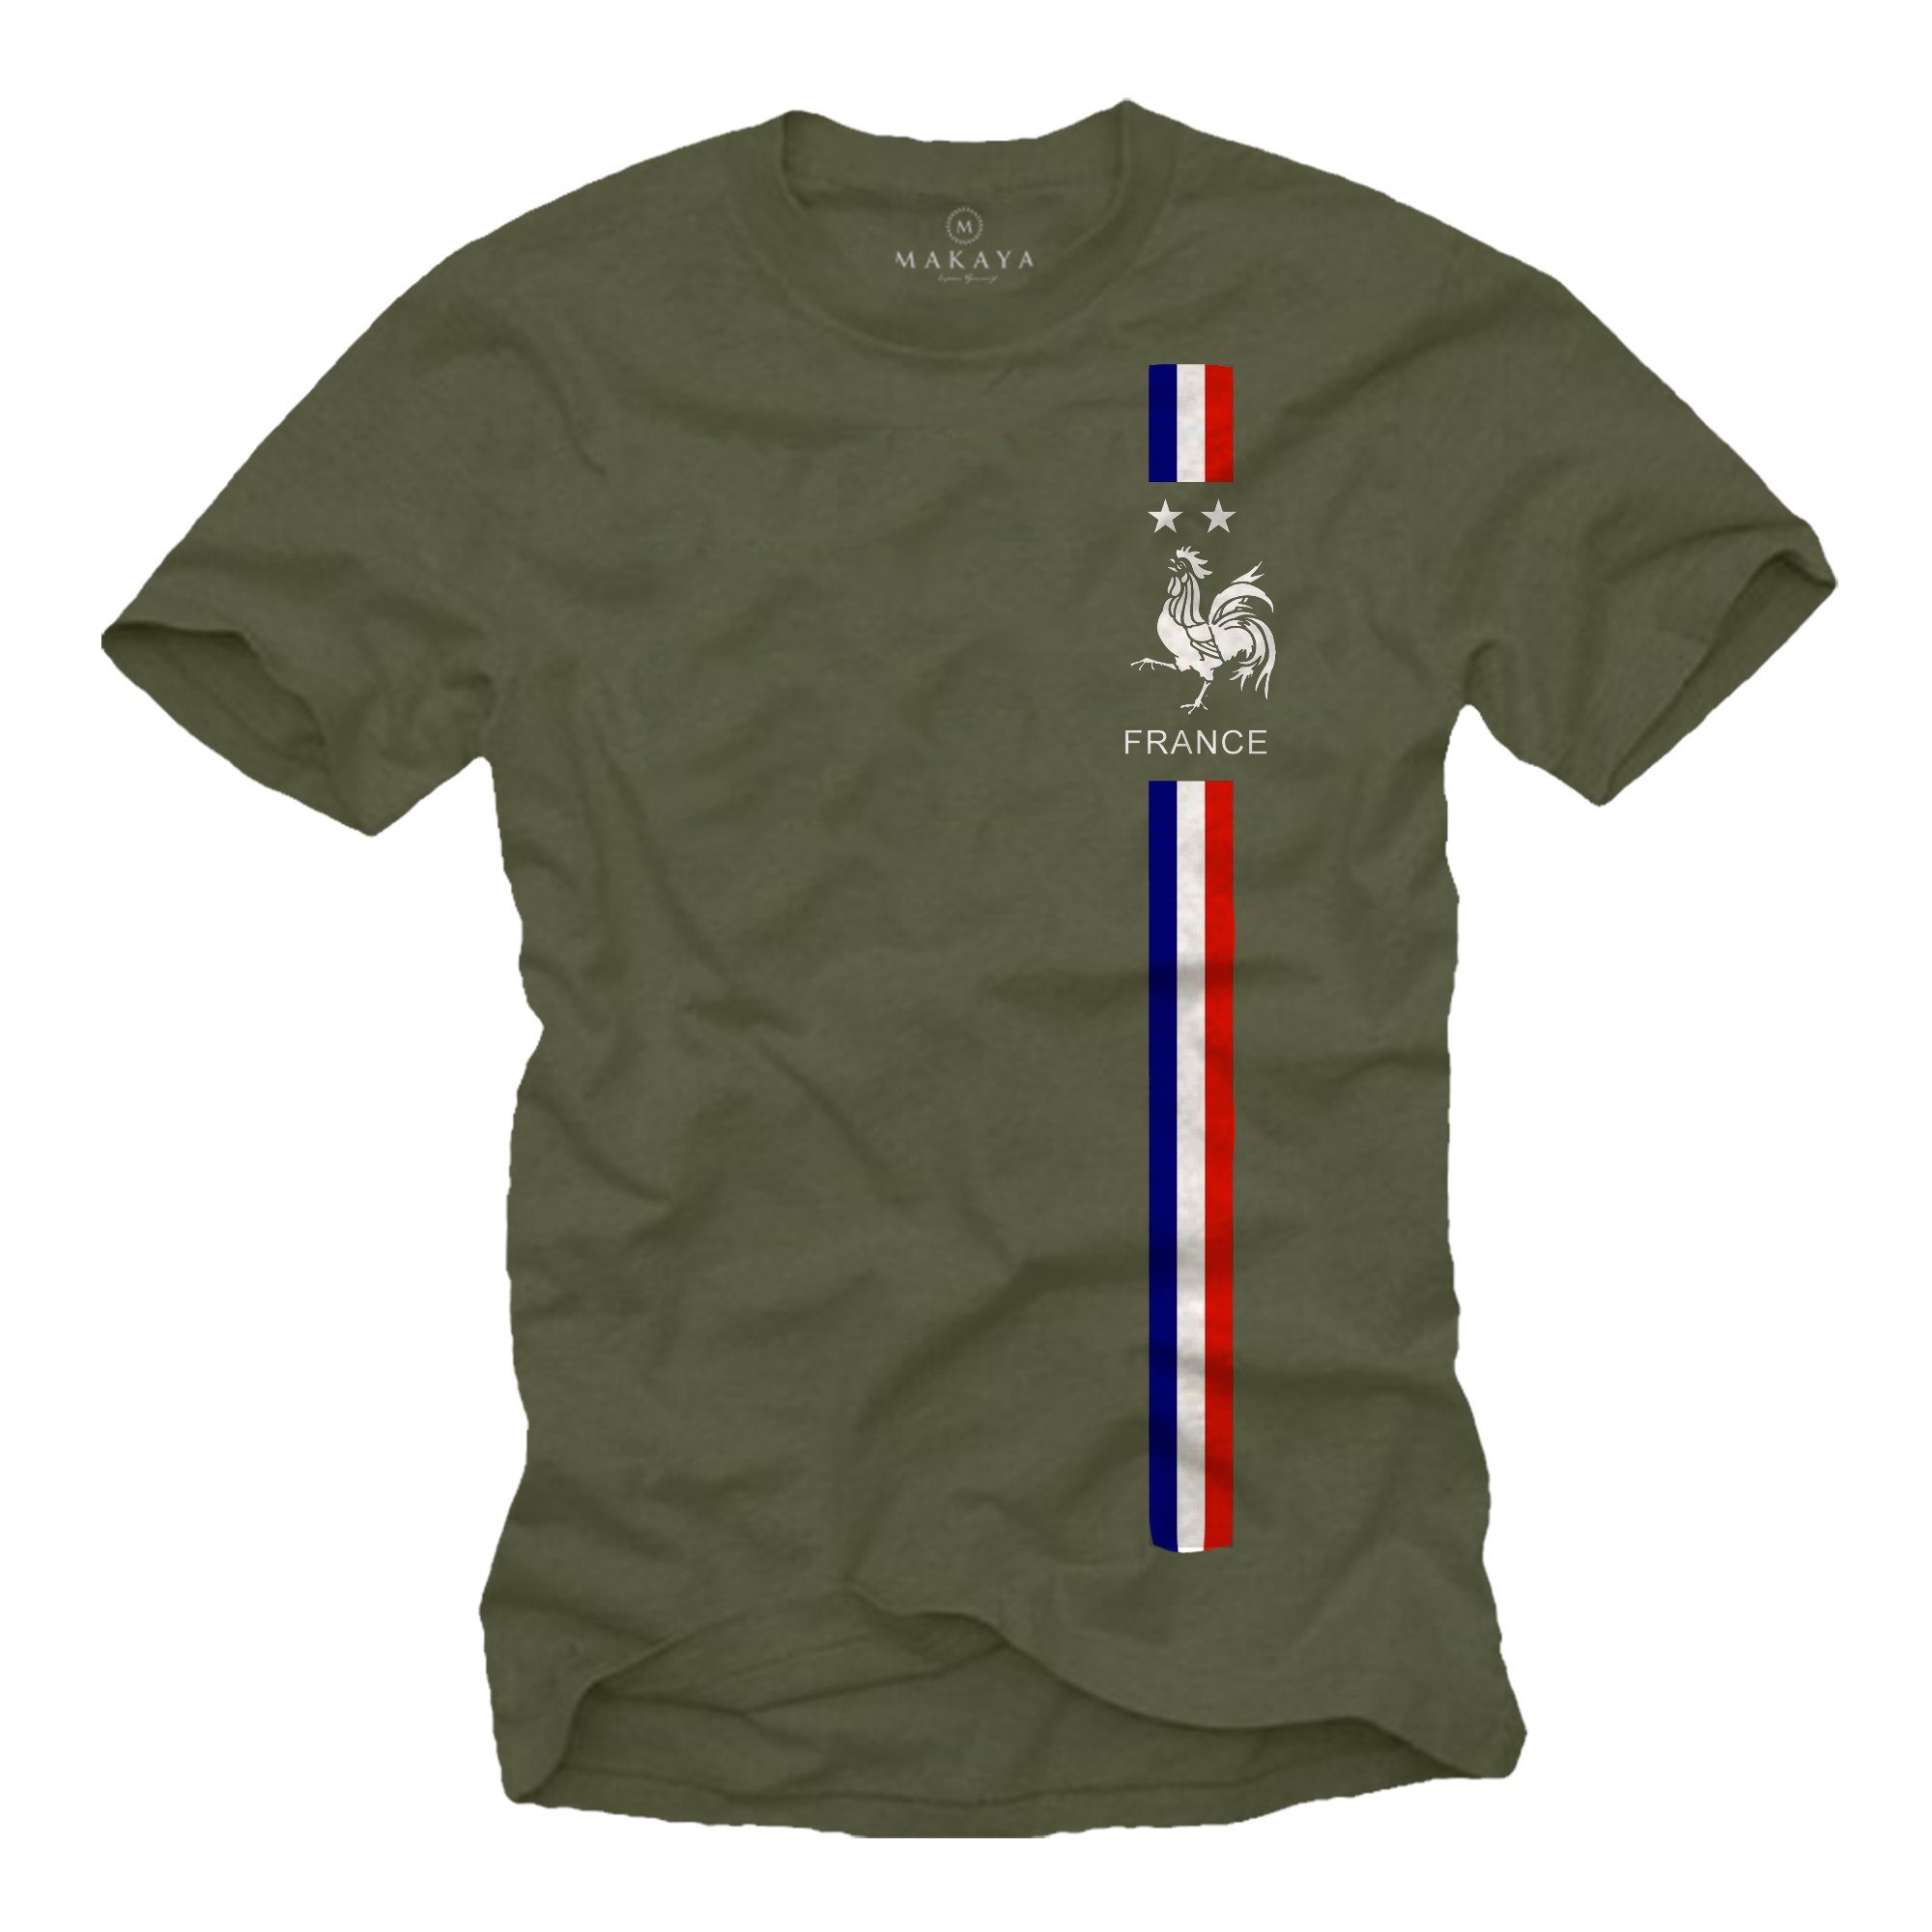 MAKAYA Print-Shirt Herren Fußball Trikot Frankreich Fahne Flagge Männer Geschenke Grün